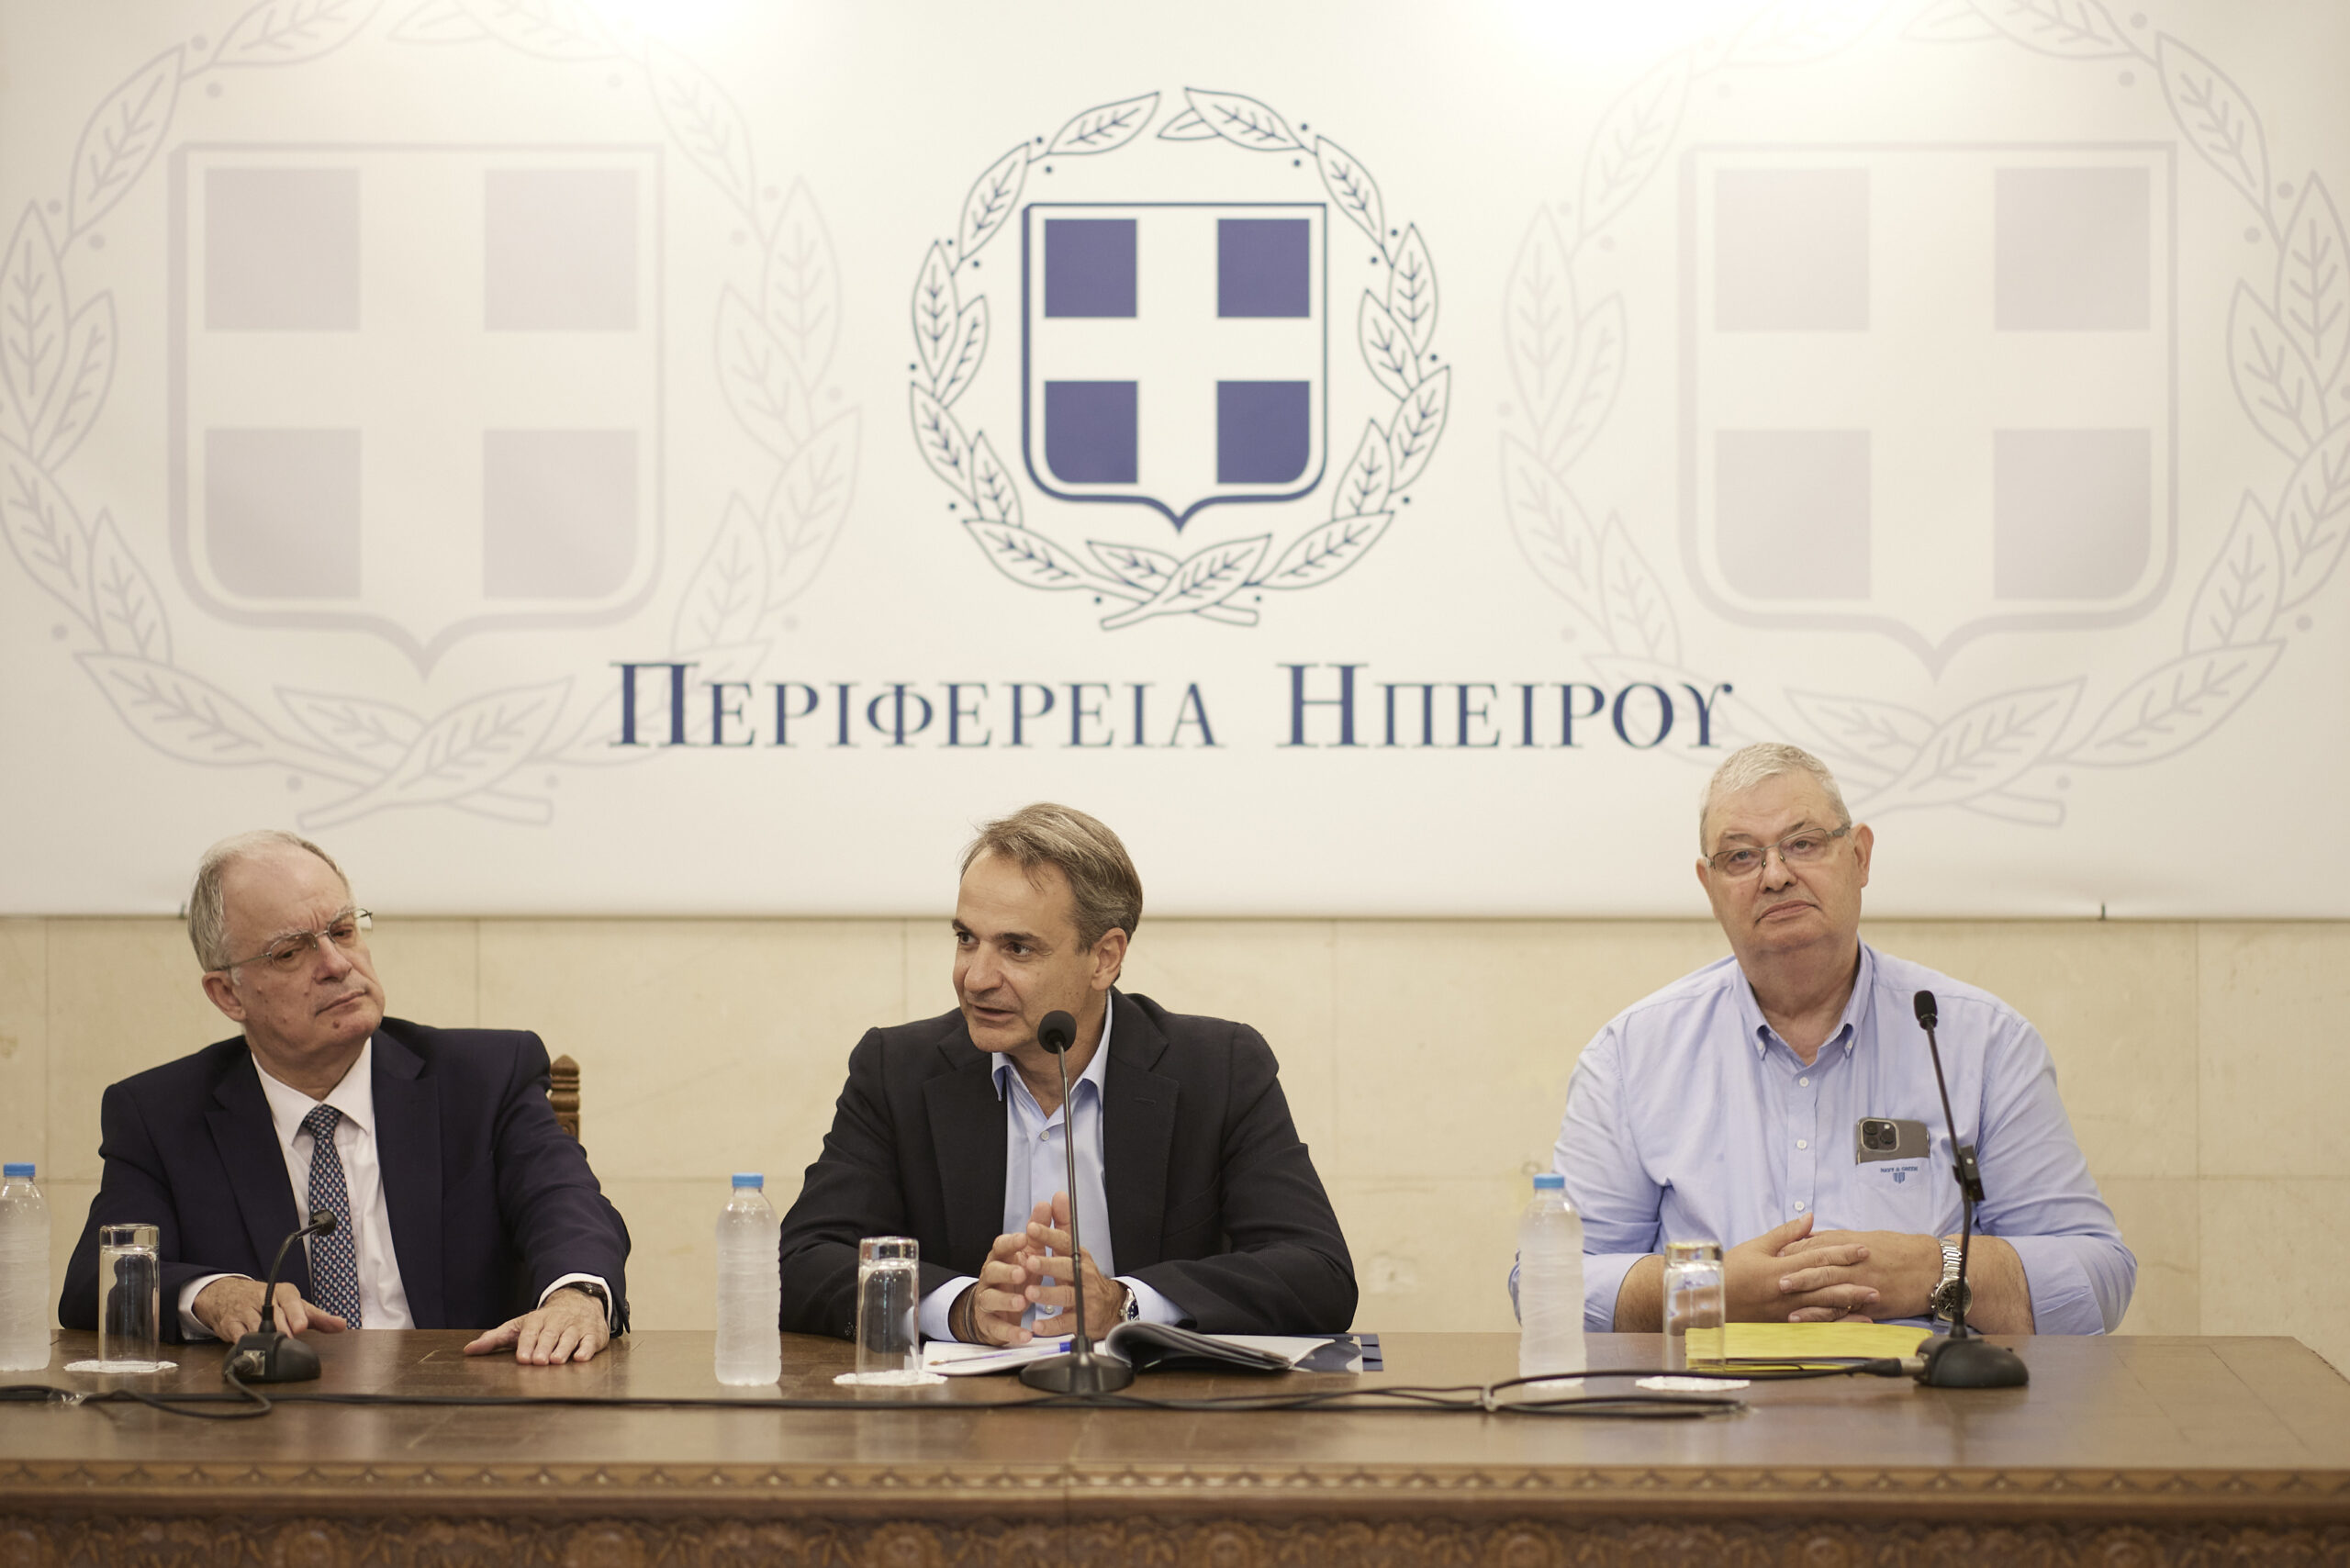 K. Μητσοτάκης από Ιωάννινα: Σε δυναμική, αναπτυξιακή πορεία η Ελλάδα – Η κυβέρνηση συνεργάζεται με την Τοπική Αυτοδιοίκηση